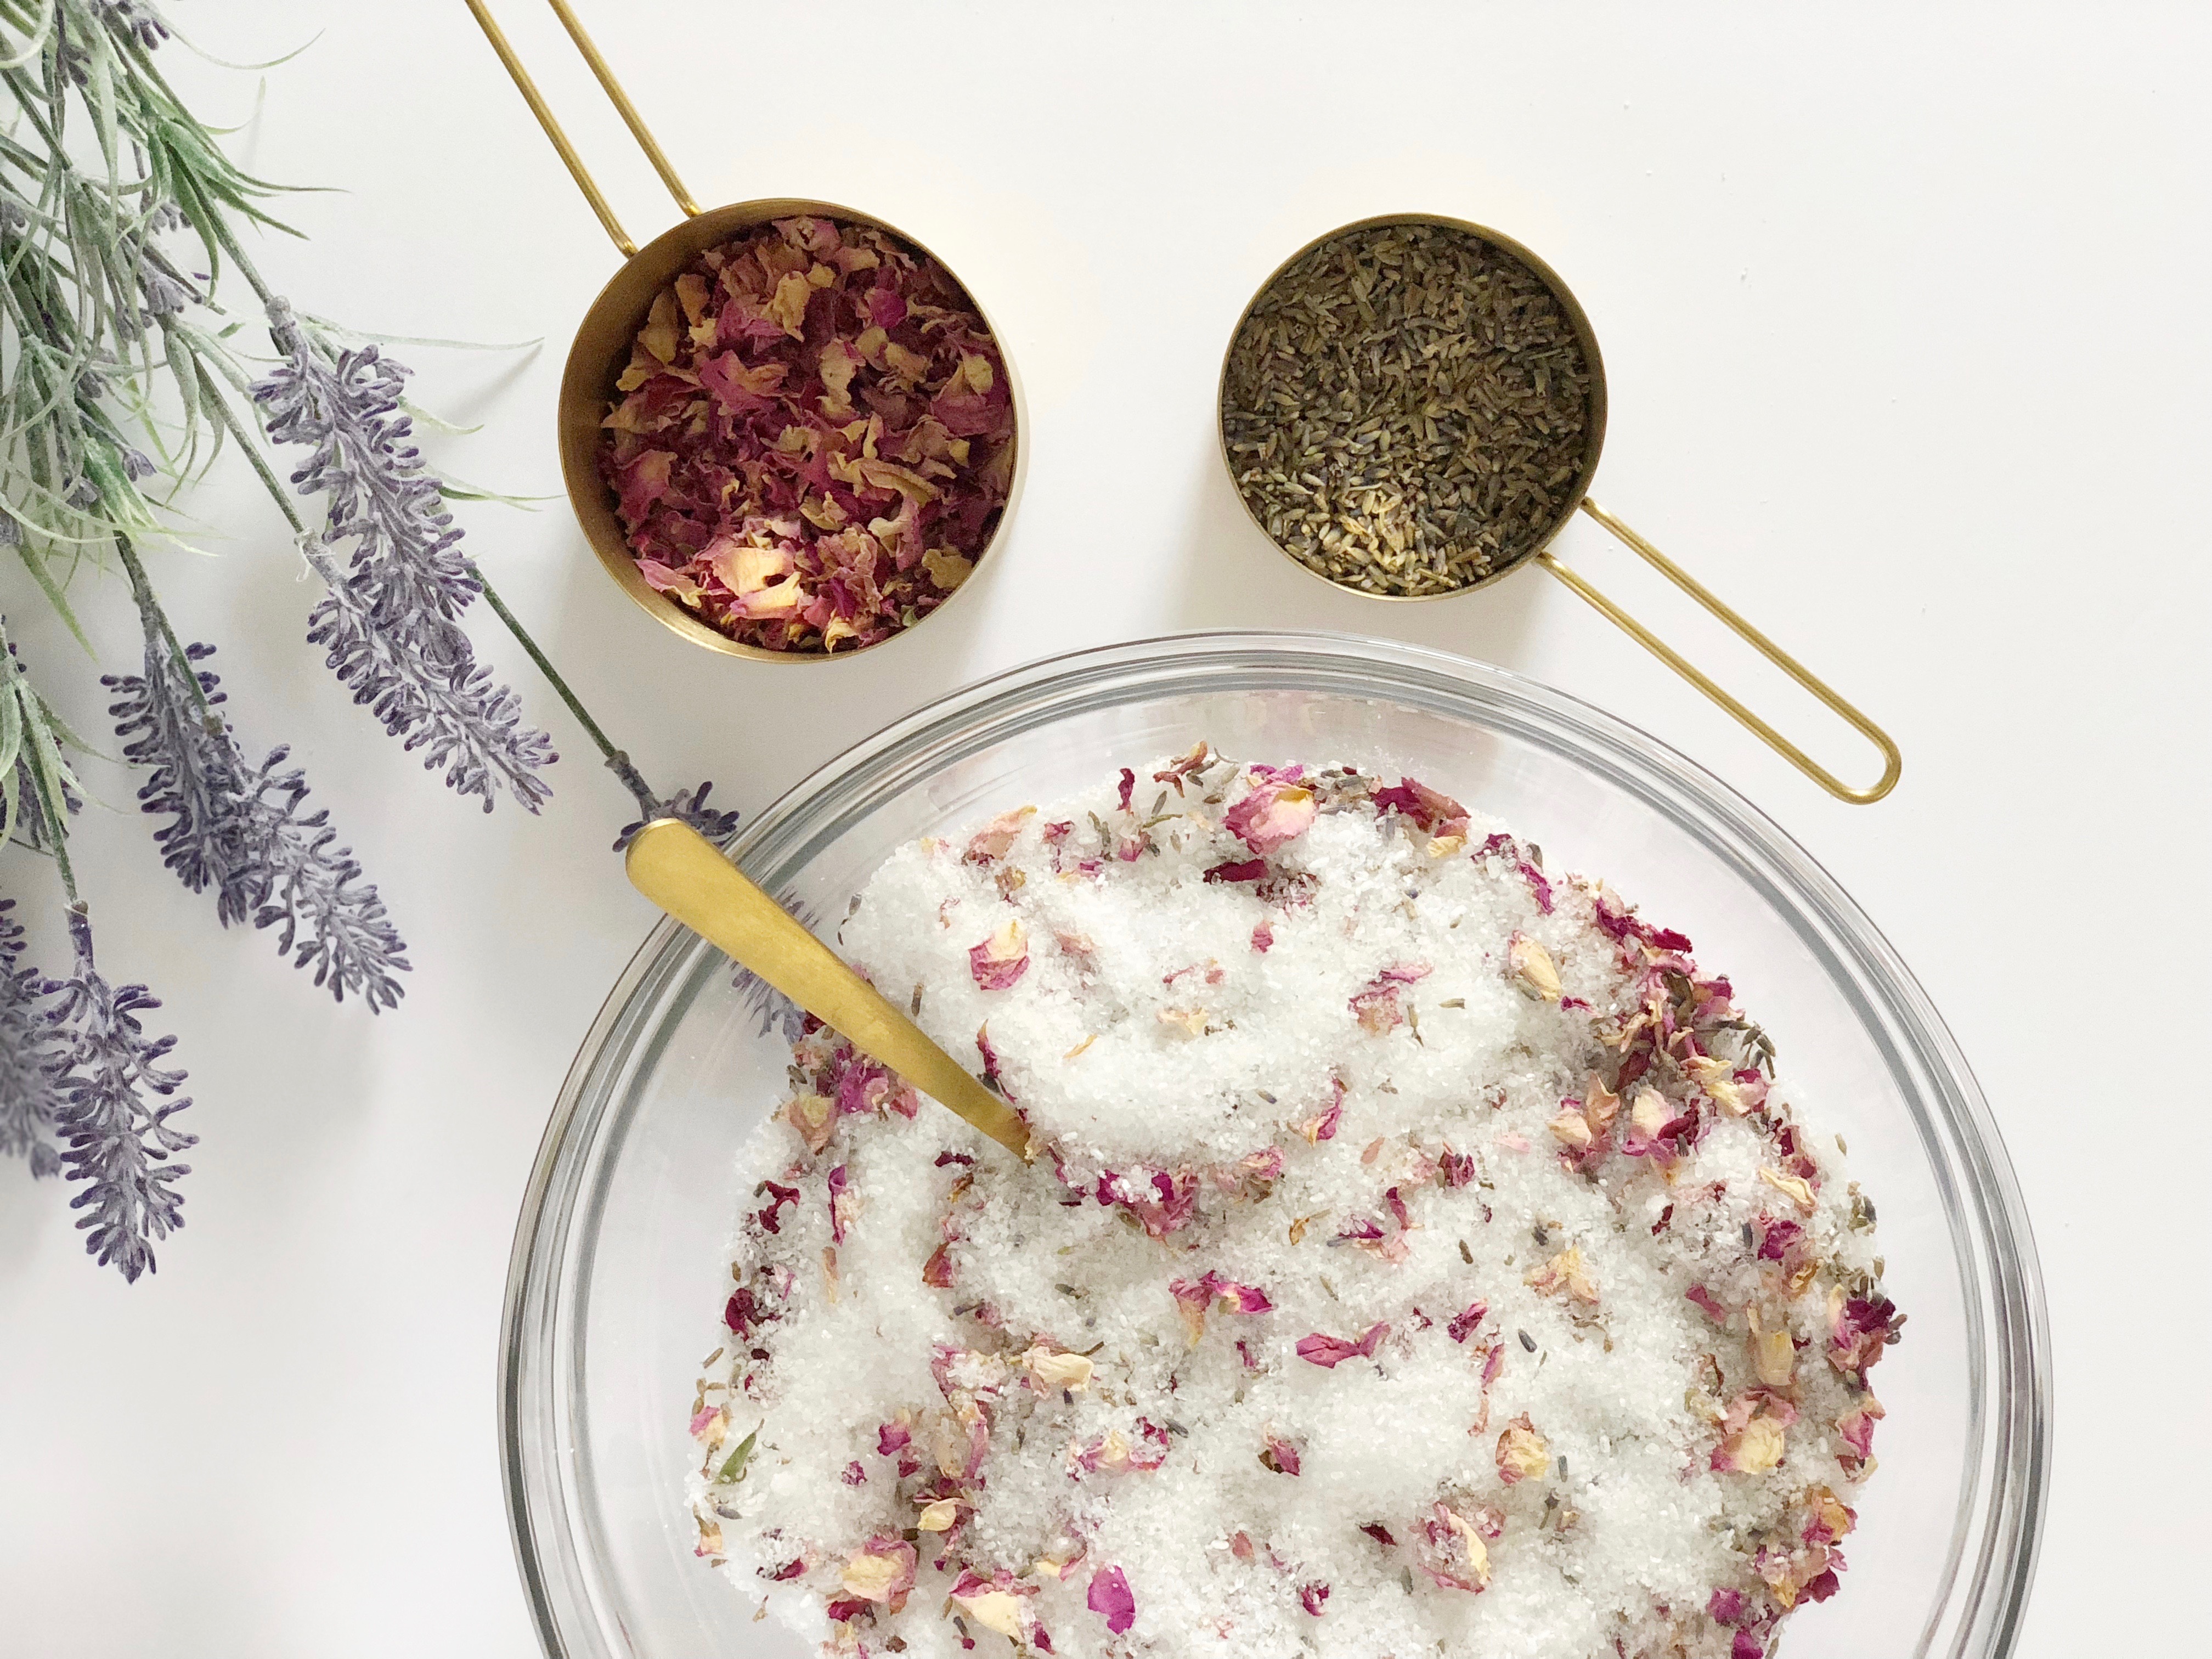 DIY soothing bath salts | epsom salts + essential oils + dried lavender and rose petals | easy self care treat yo self | fun natural DIY